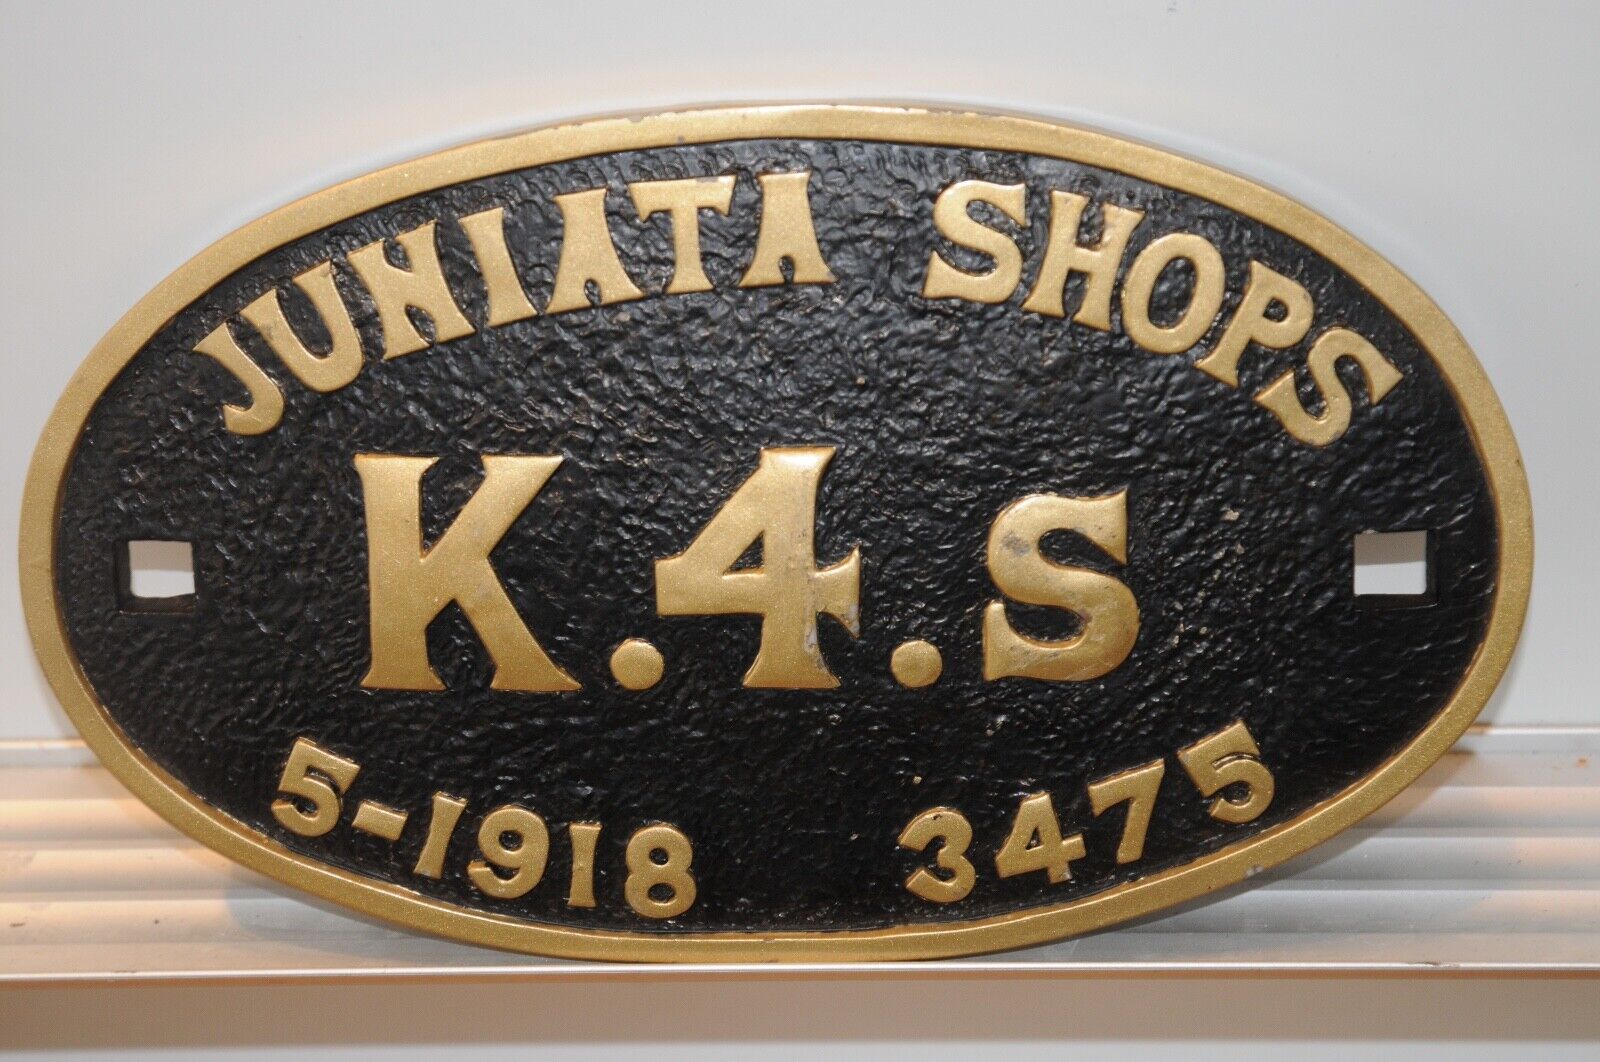 K4s Juniata Shops Altoona PA Builders Plate Replica Resin 5-1918  3475 Railroad.